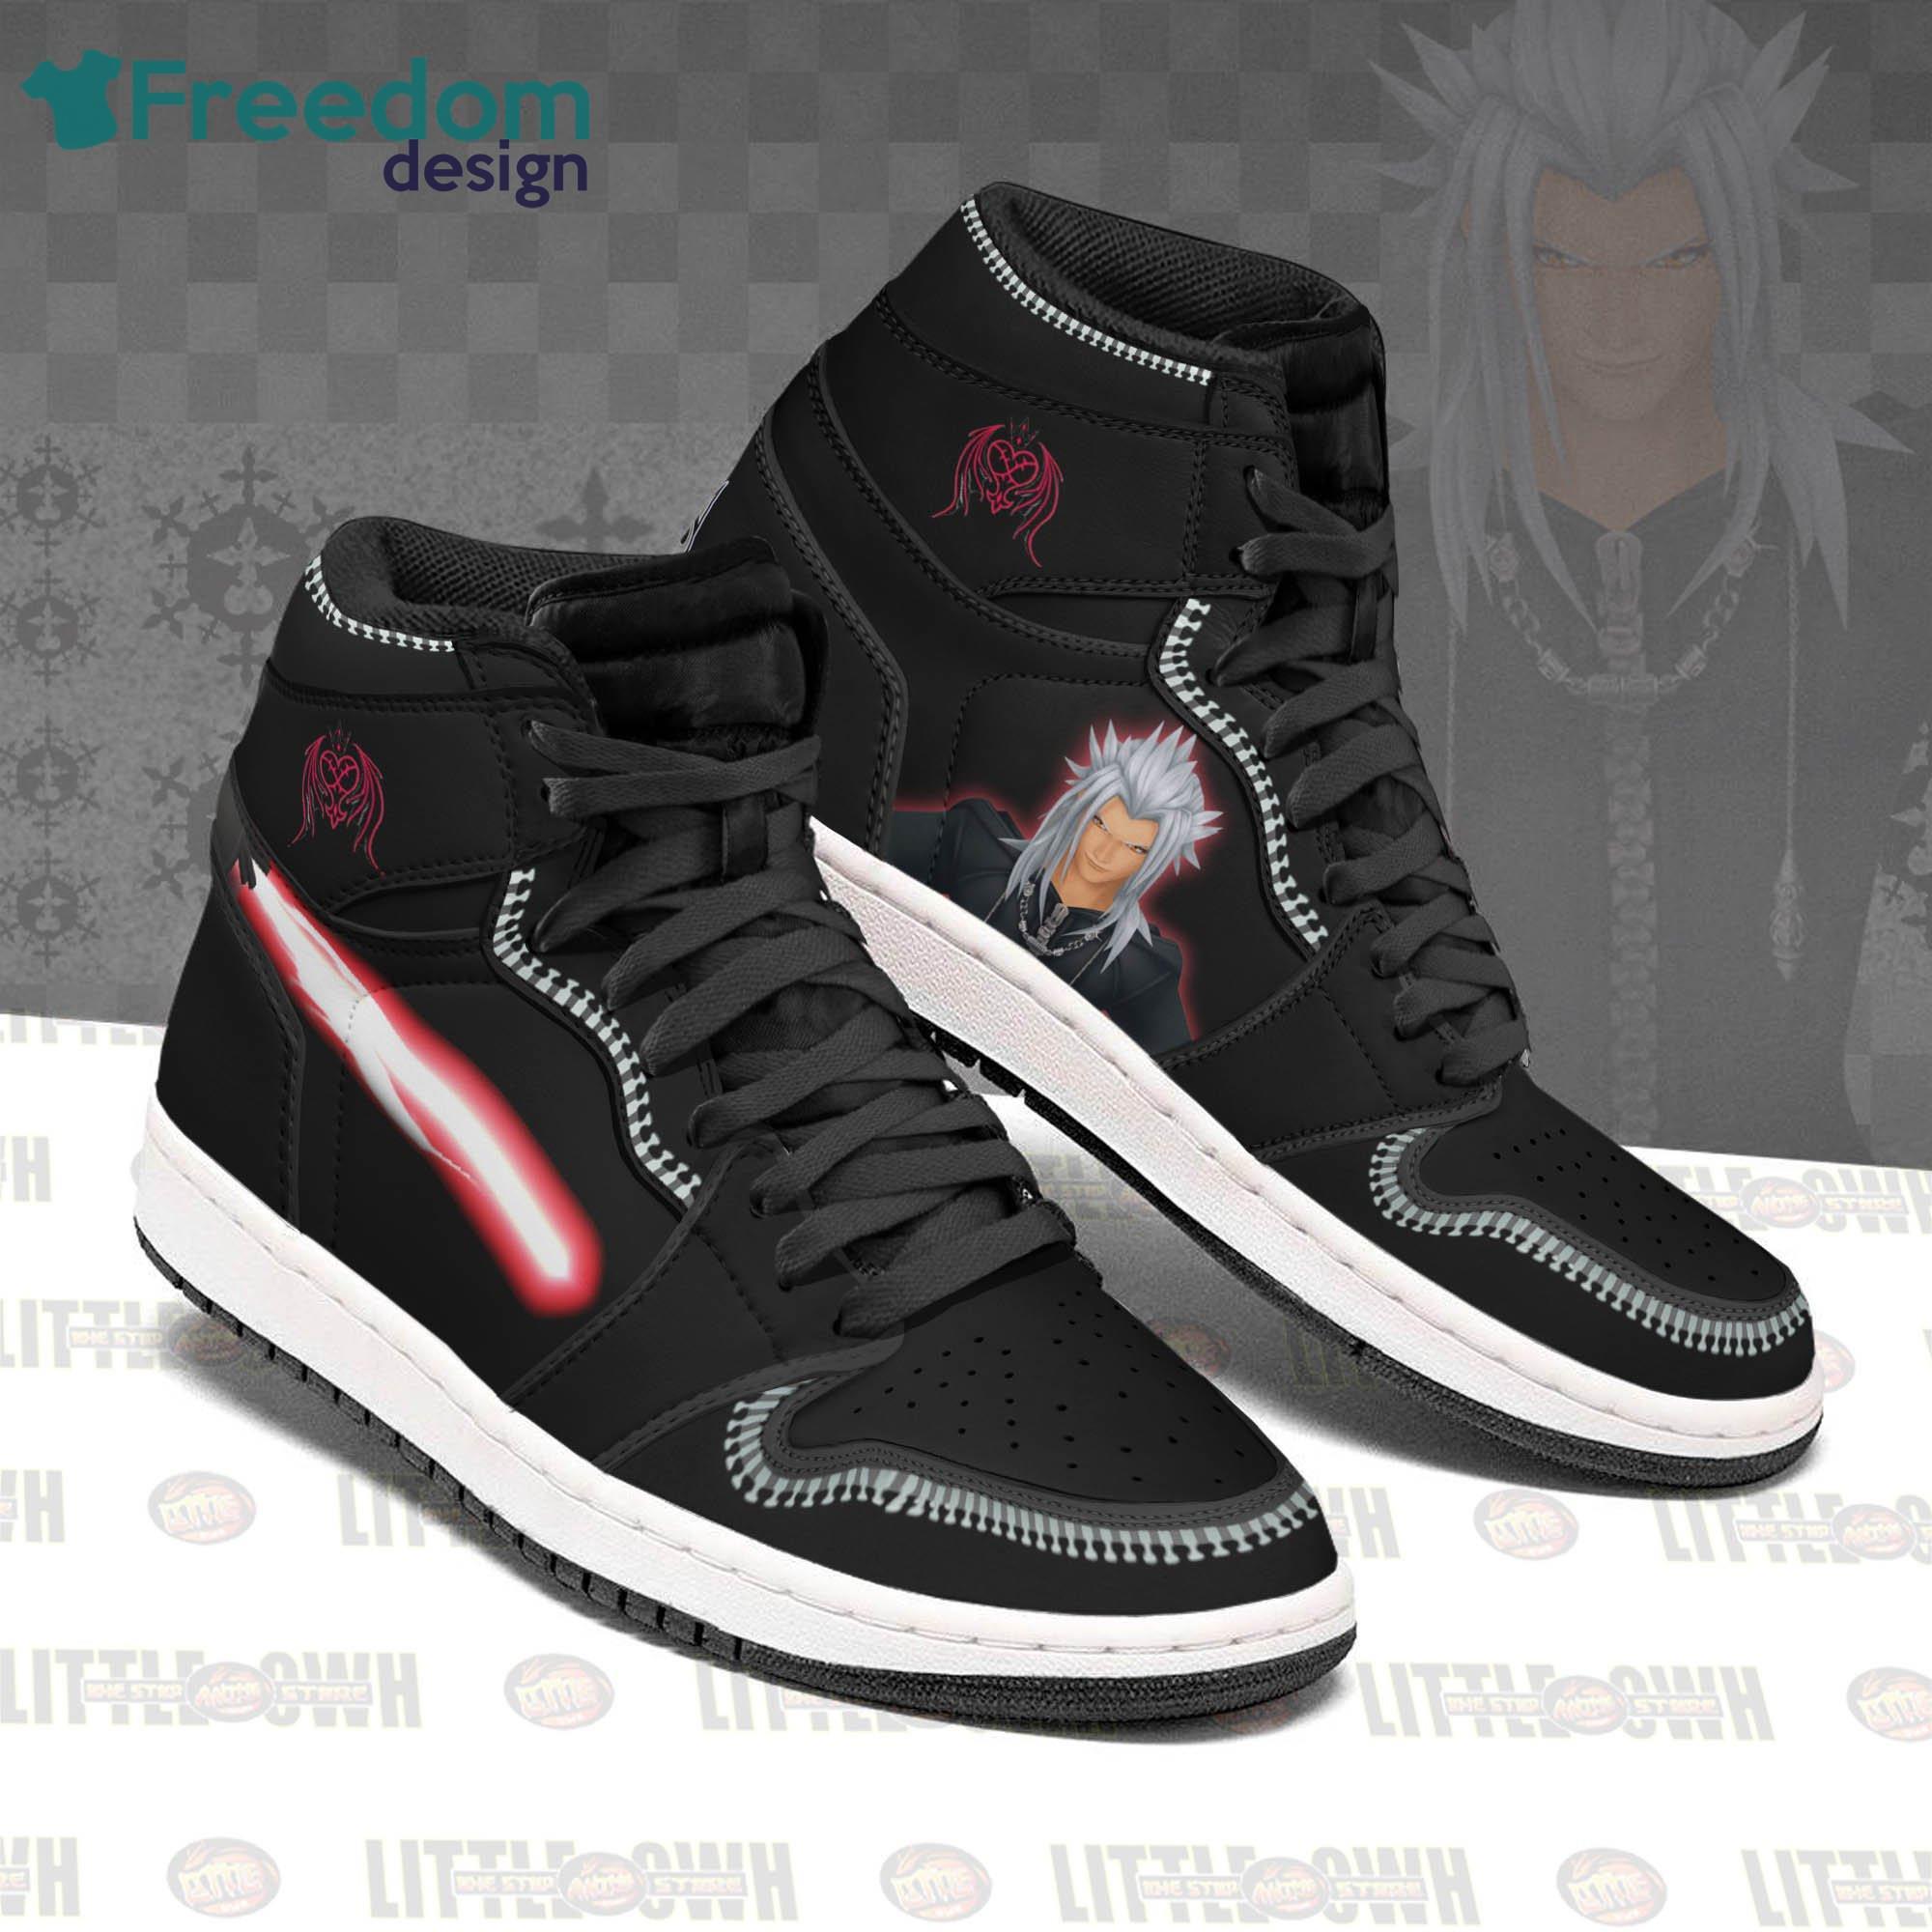 Andemnas Air Jordan Hightop Shoes Kingdom Hearts Anime